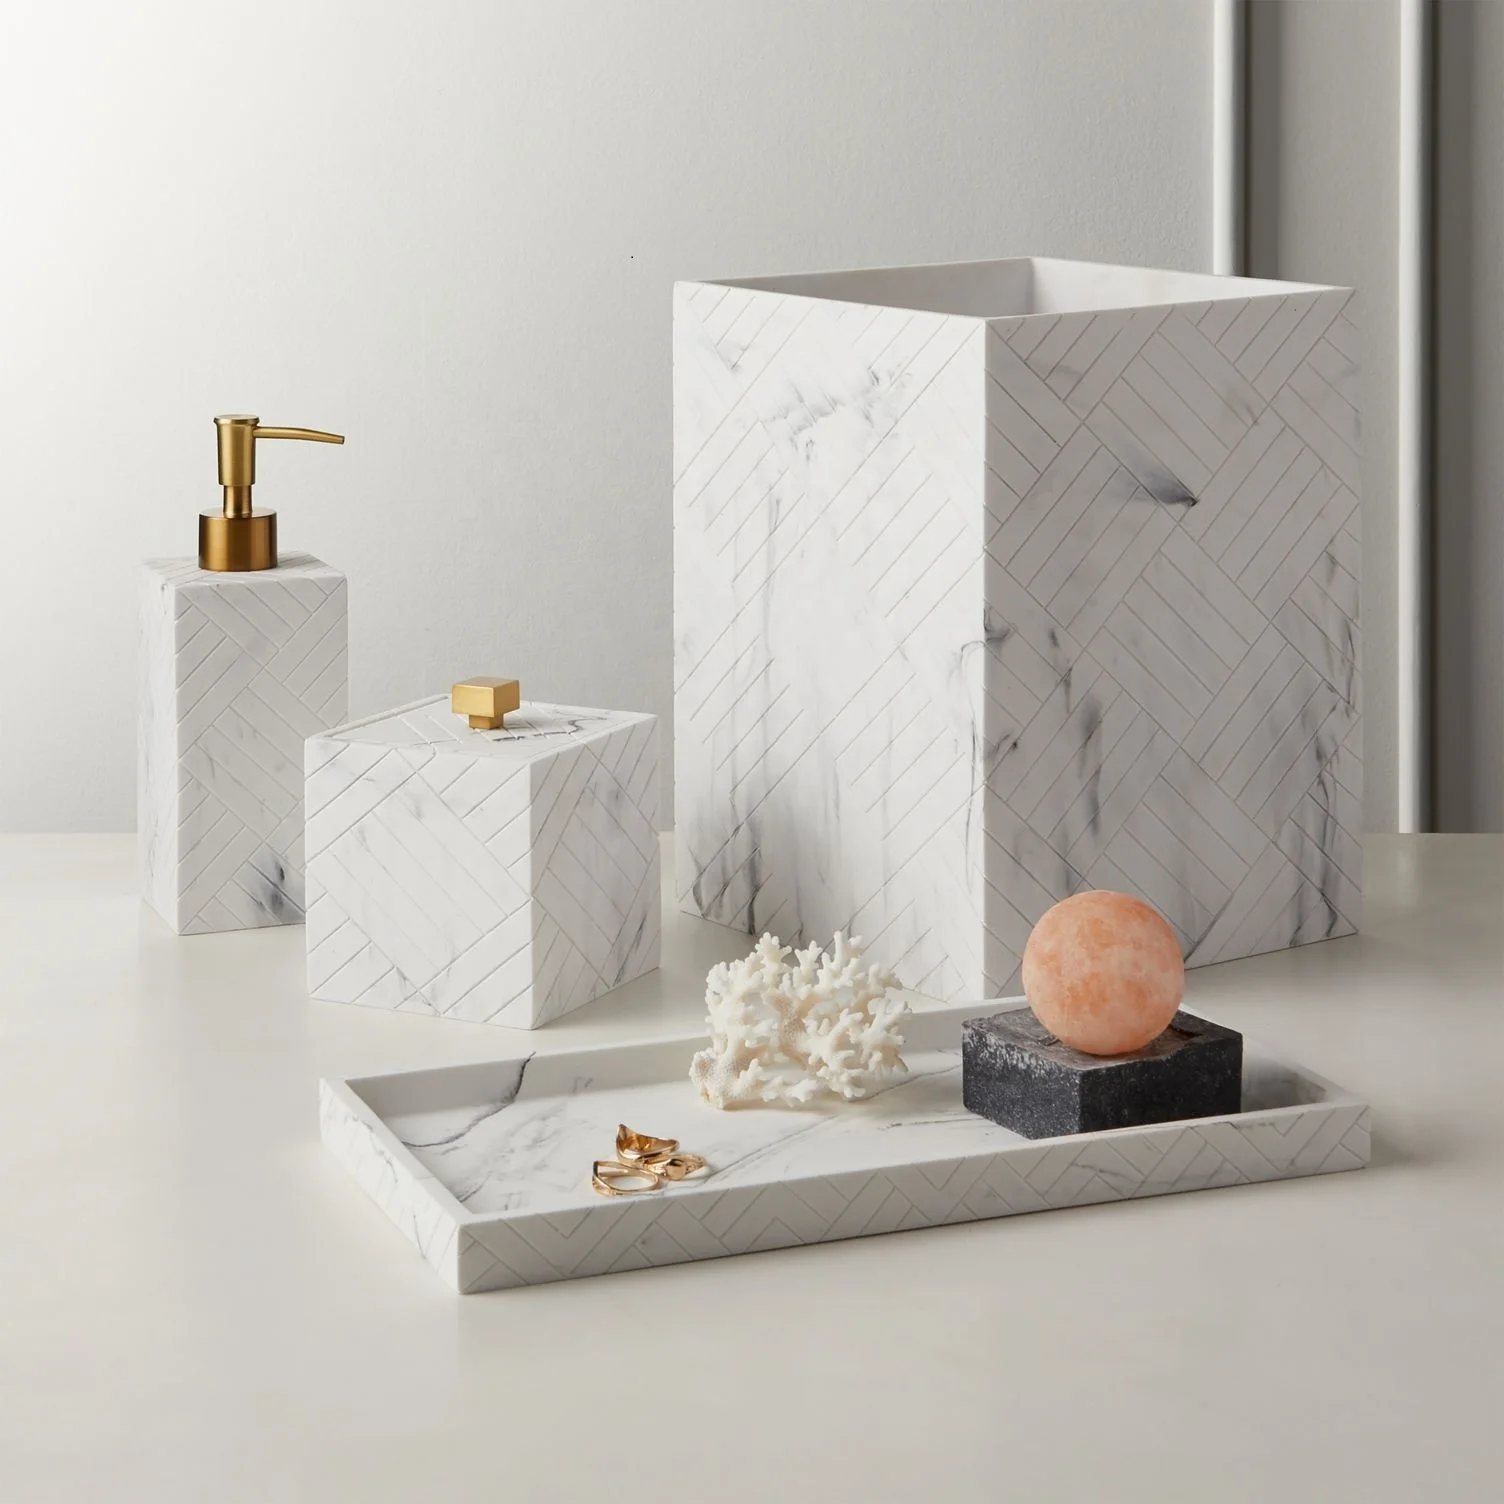 Modern Classic White Marble Resin Bathroom Sets For Gift